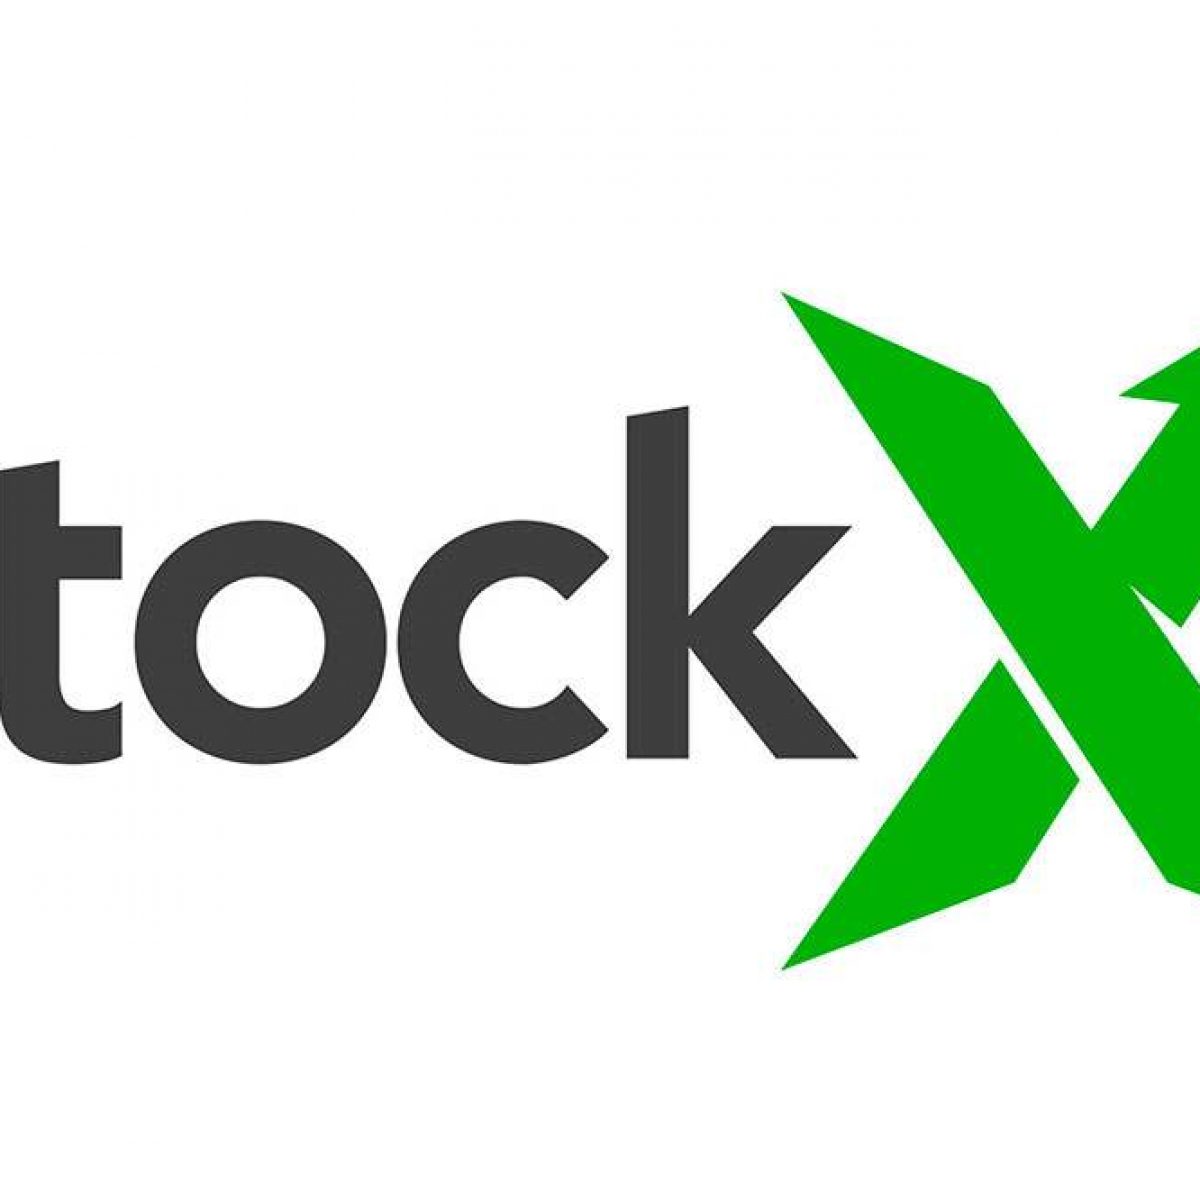 Stockx Tag 